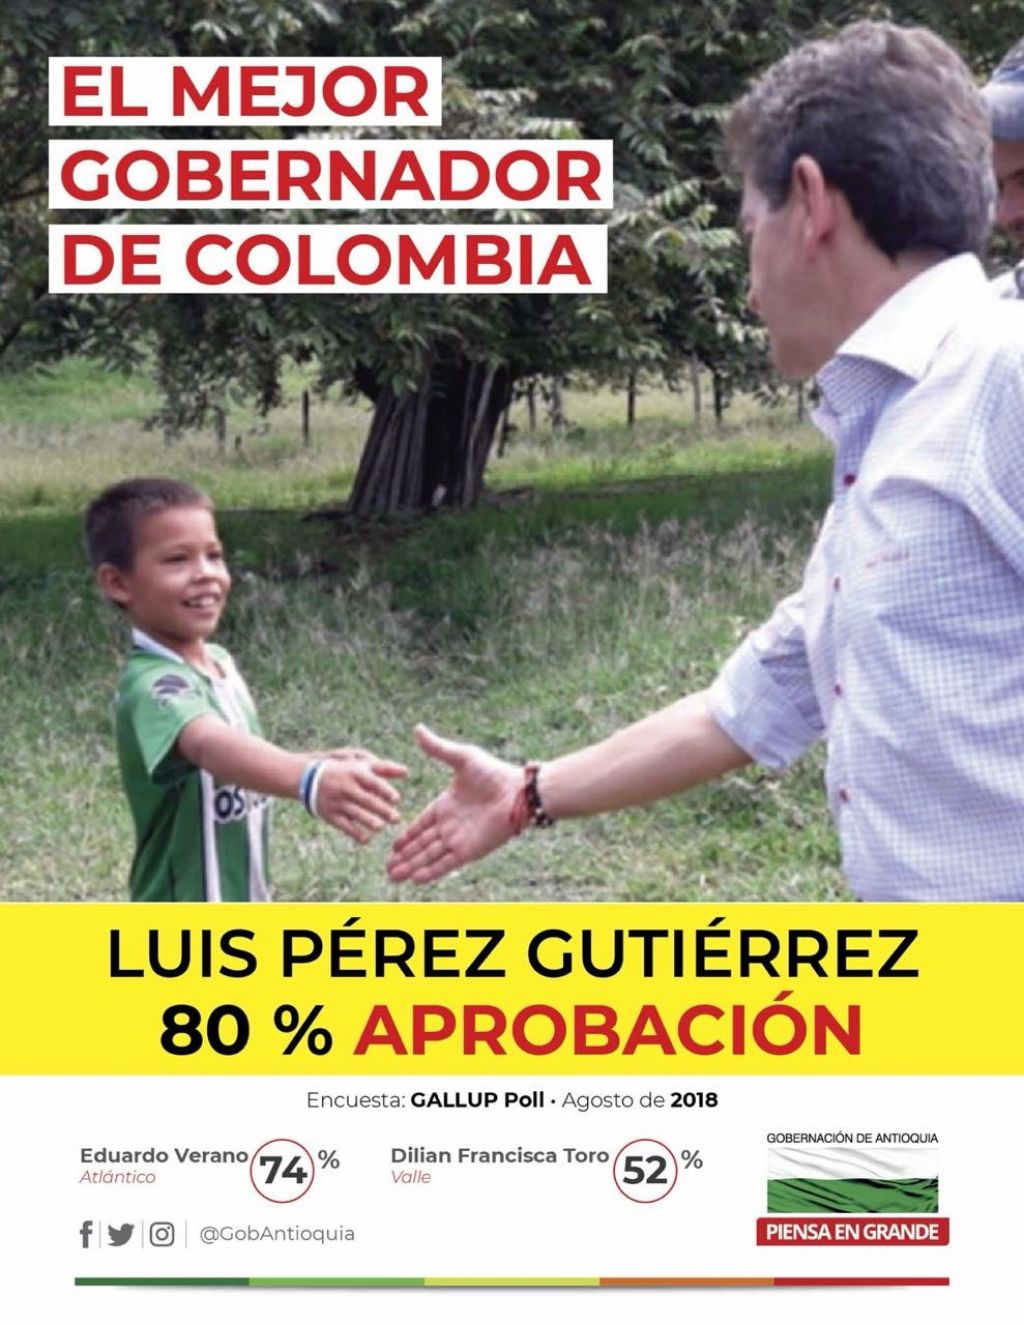 El mejor Gobernador de Colombia, Luis Pérez Gutiérrez